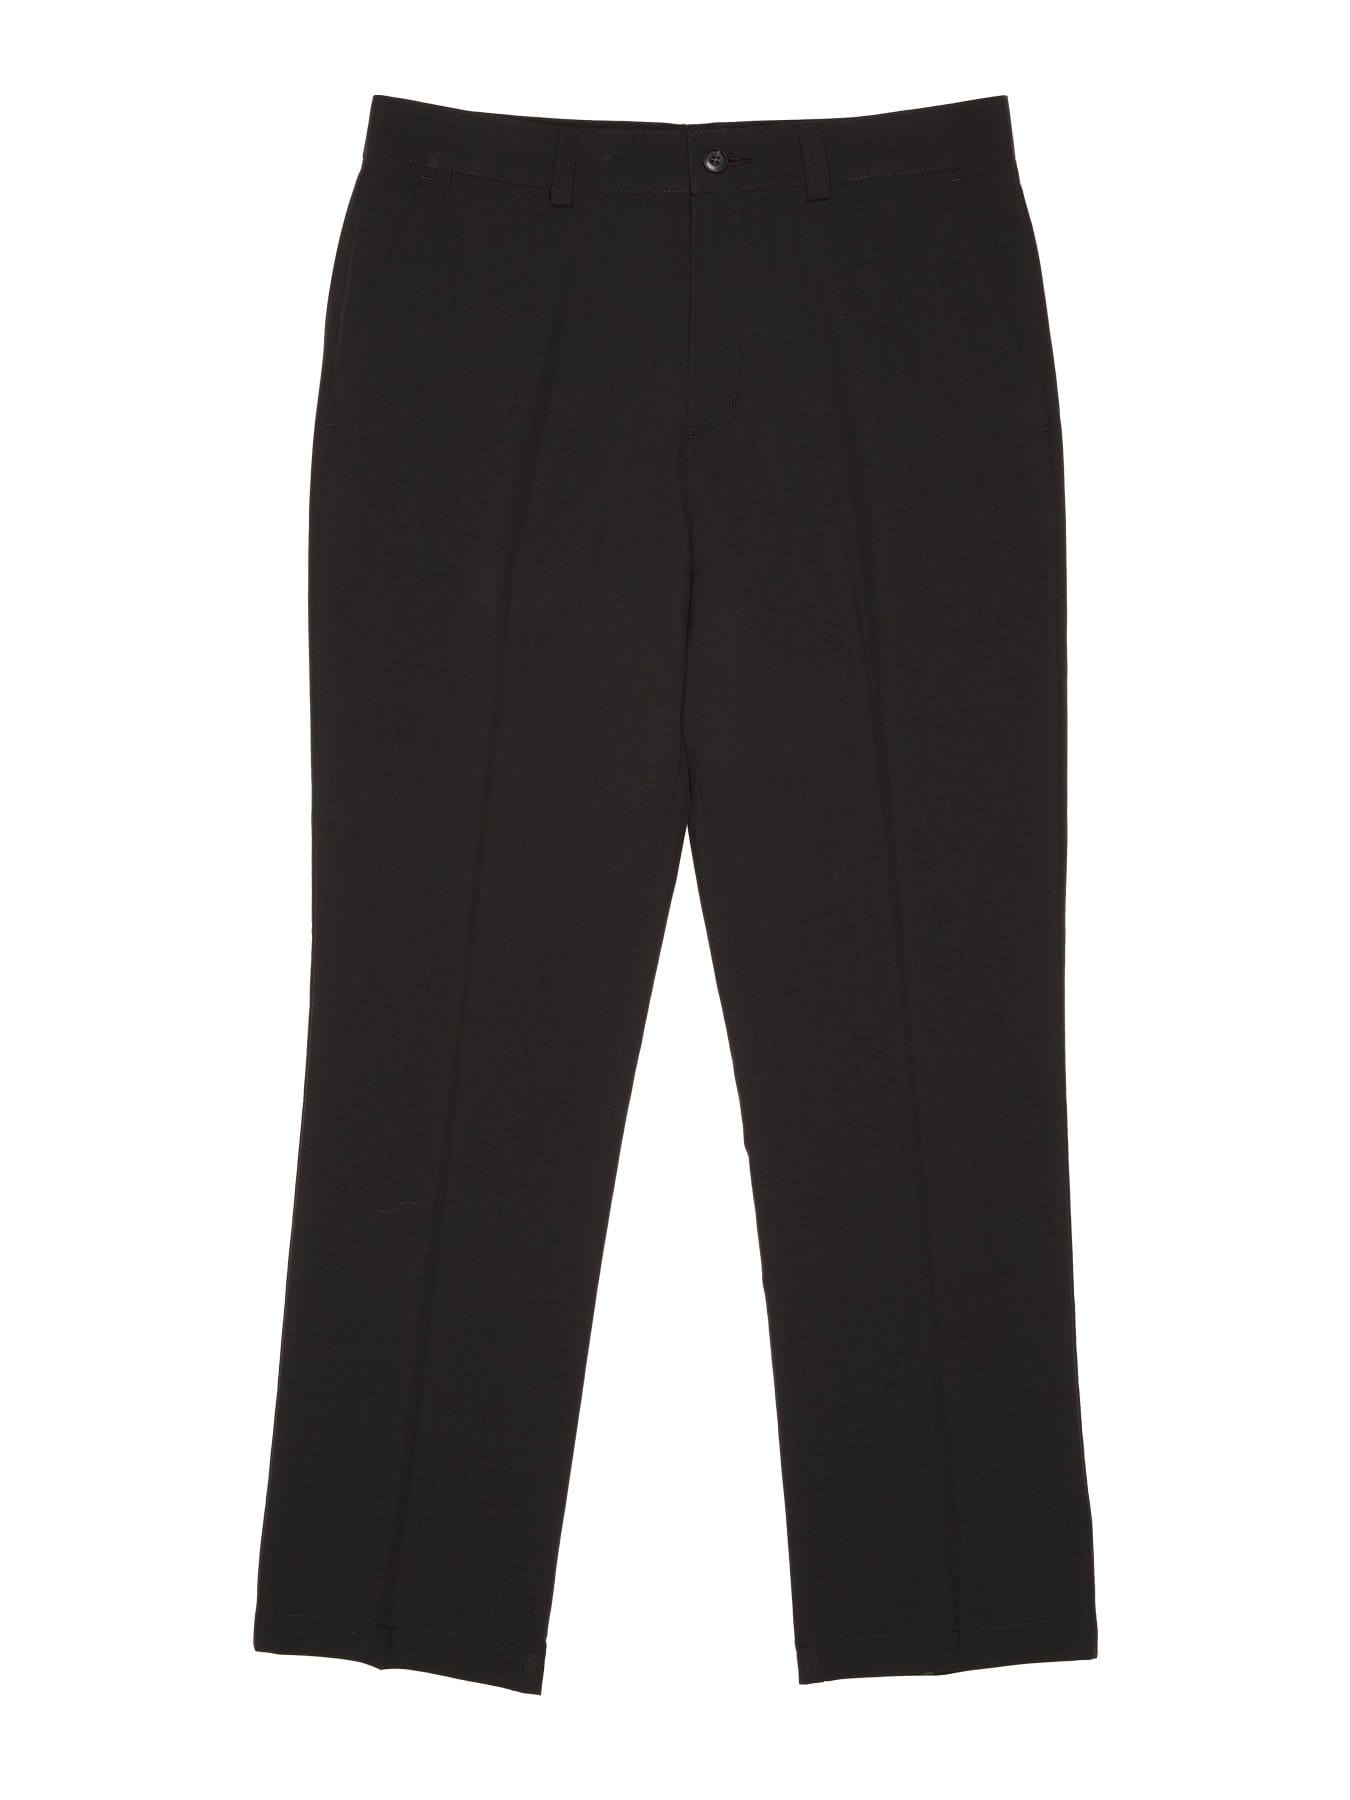 PGA TOUR Apparel Boys Flat Front Solid Pants, Size Large, Black, Polyester/Elastane | Golf Apparel Shop